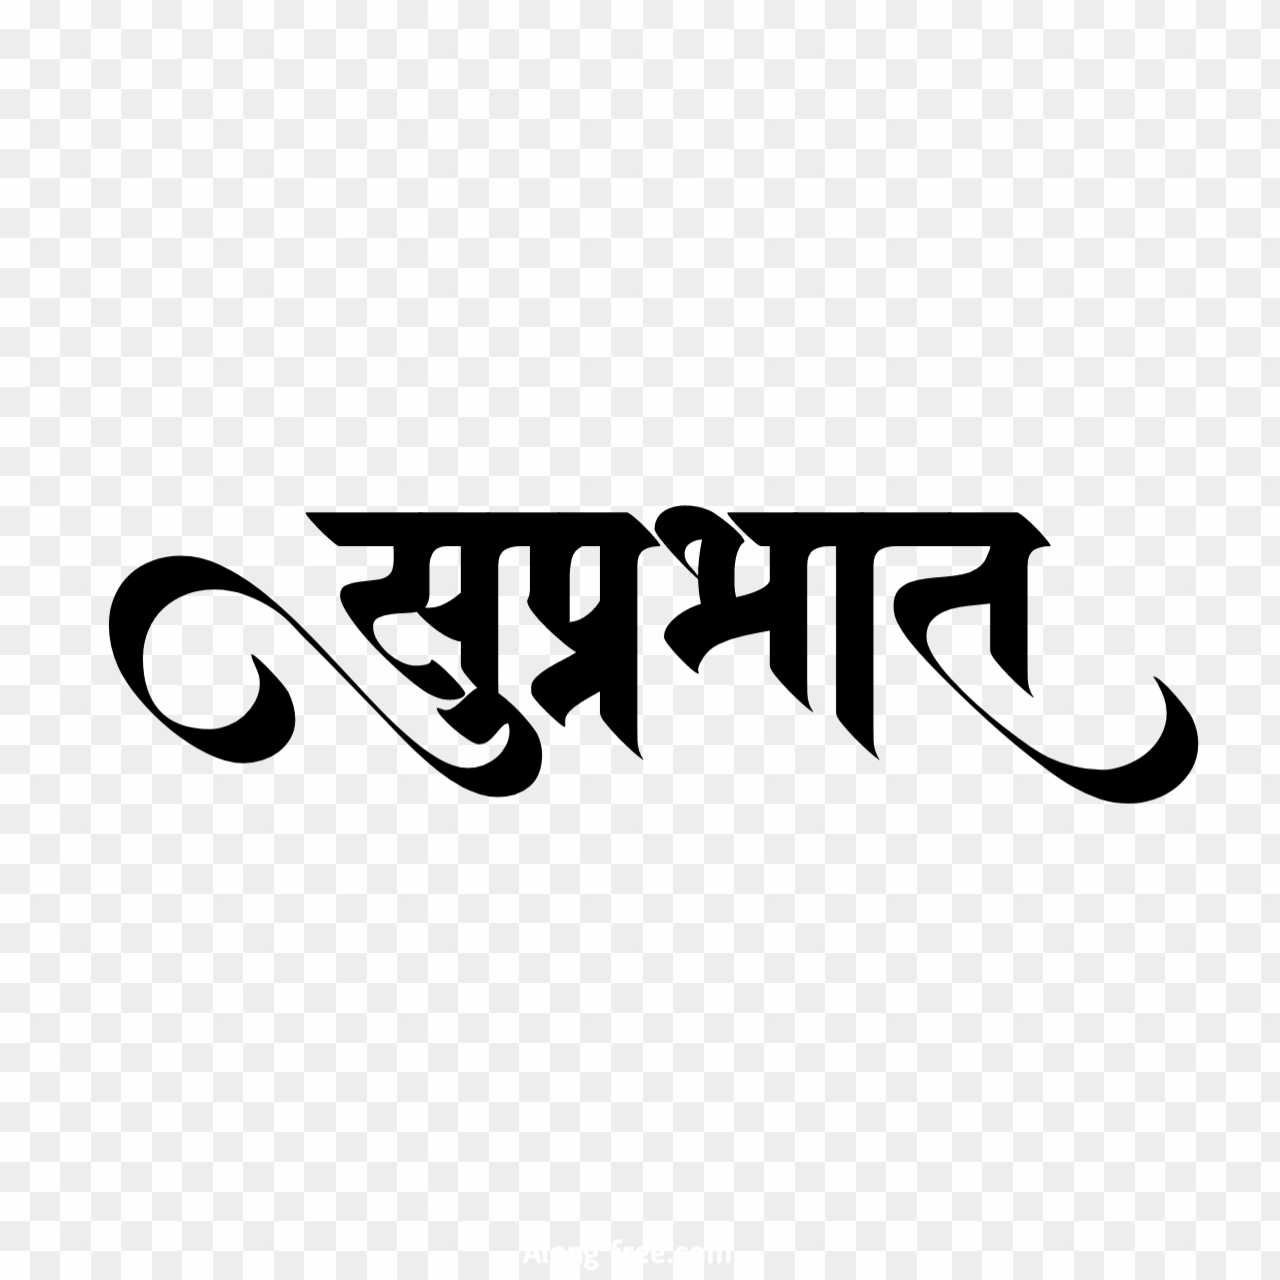 Good morning in Hindi suprabhat text PNG images